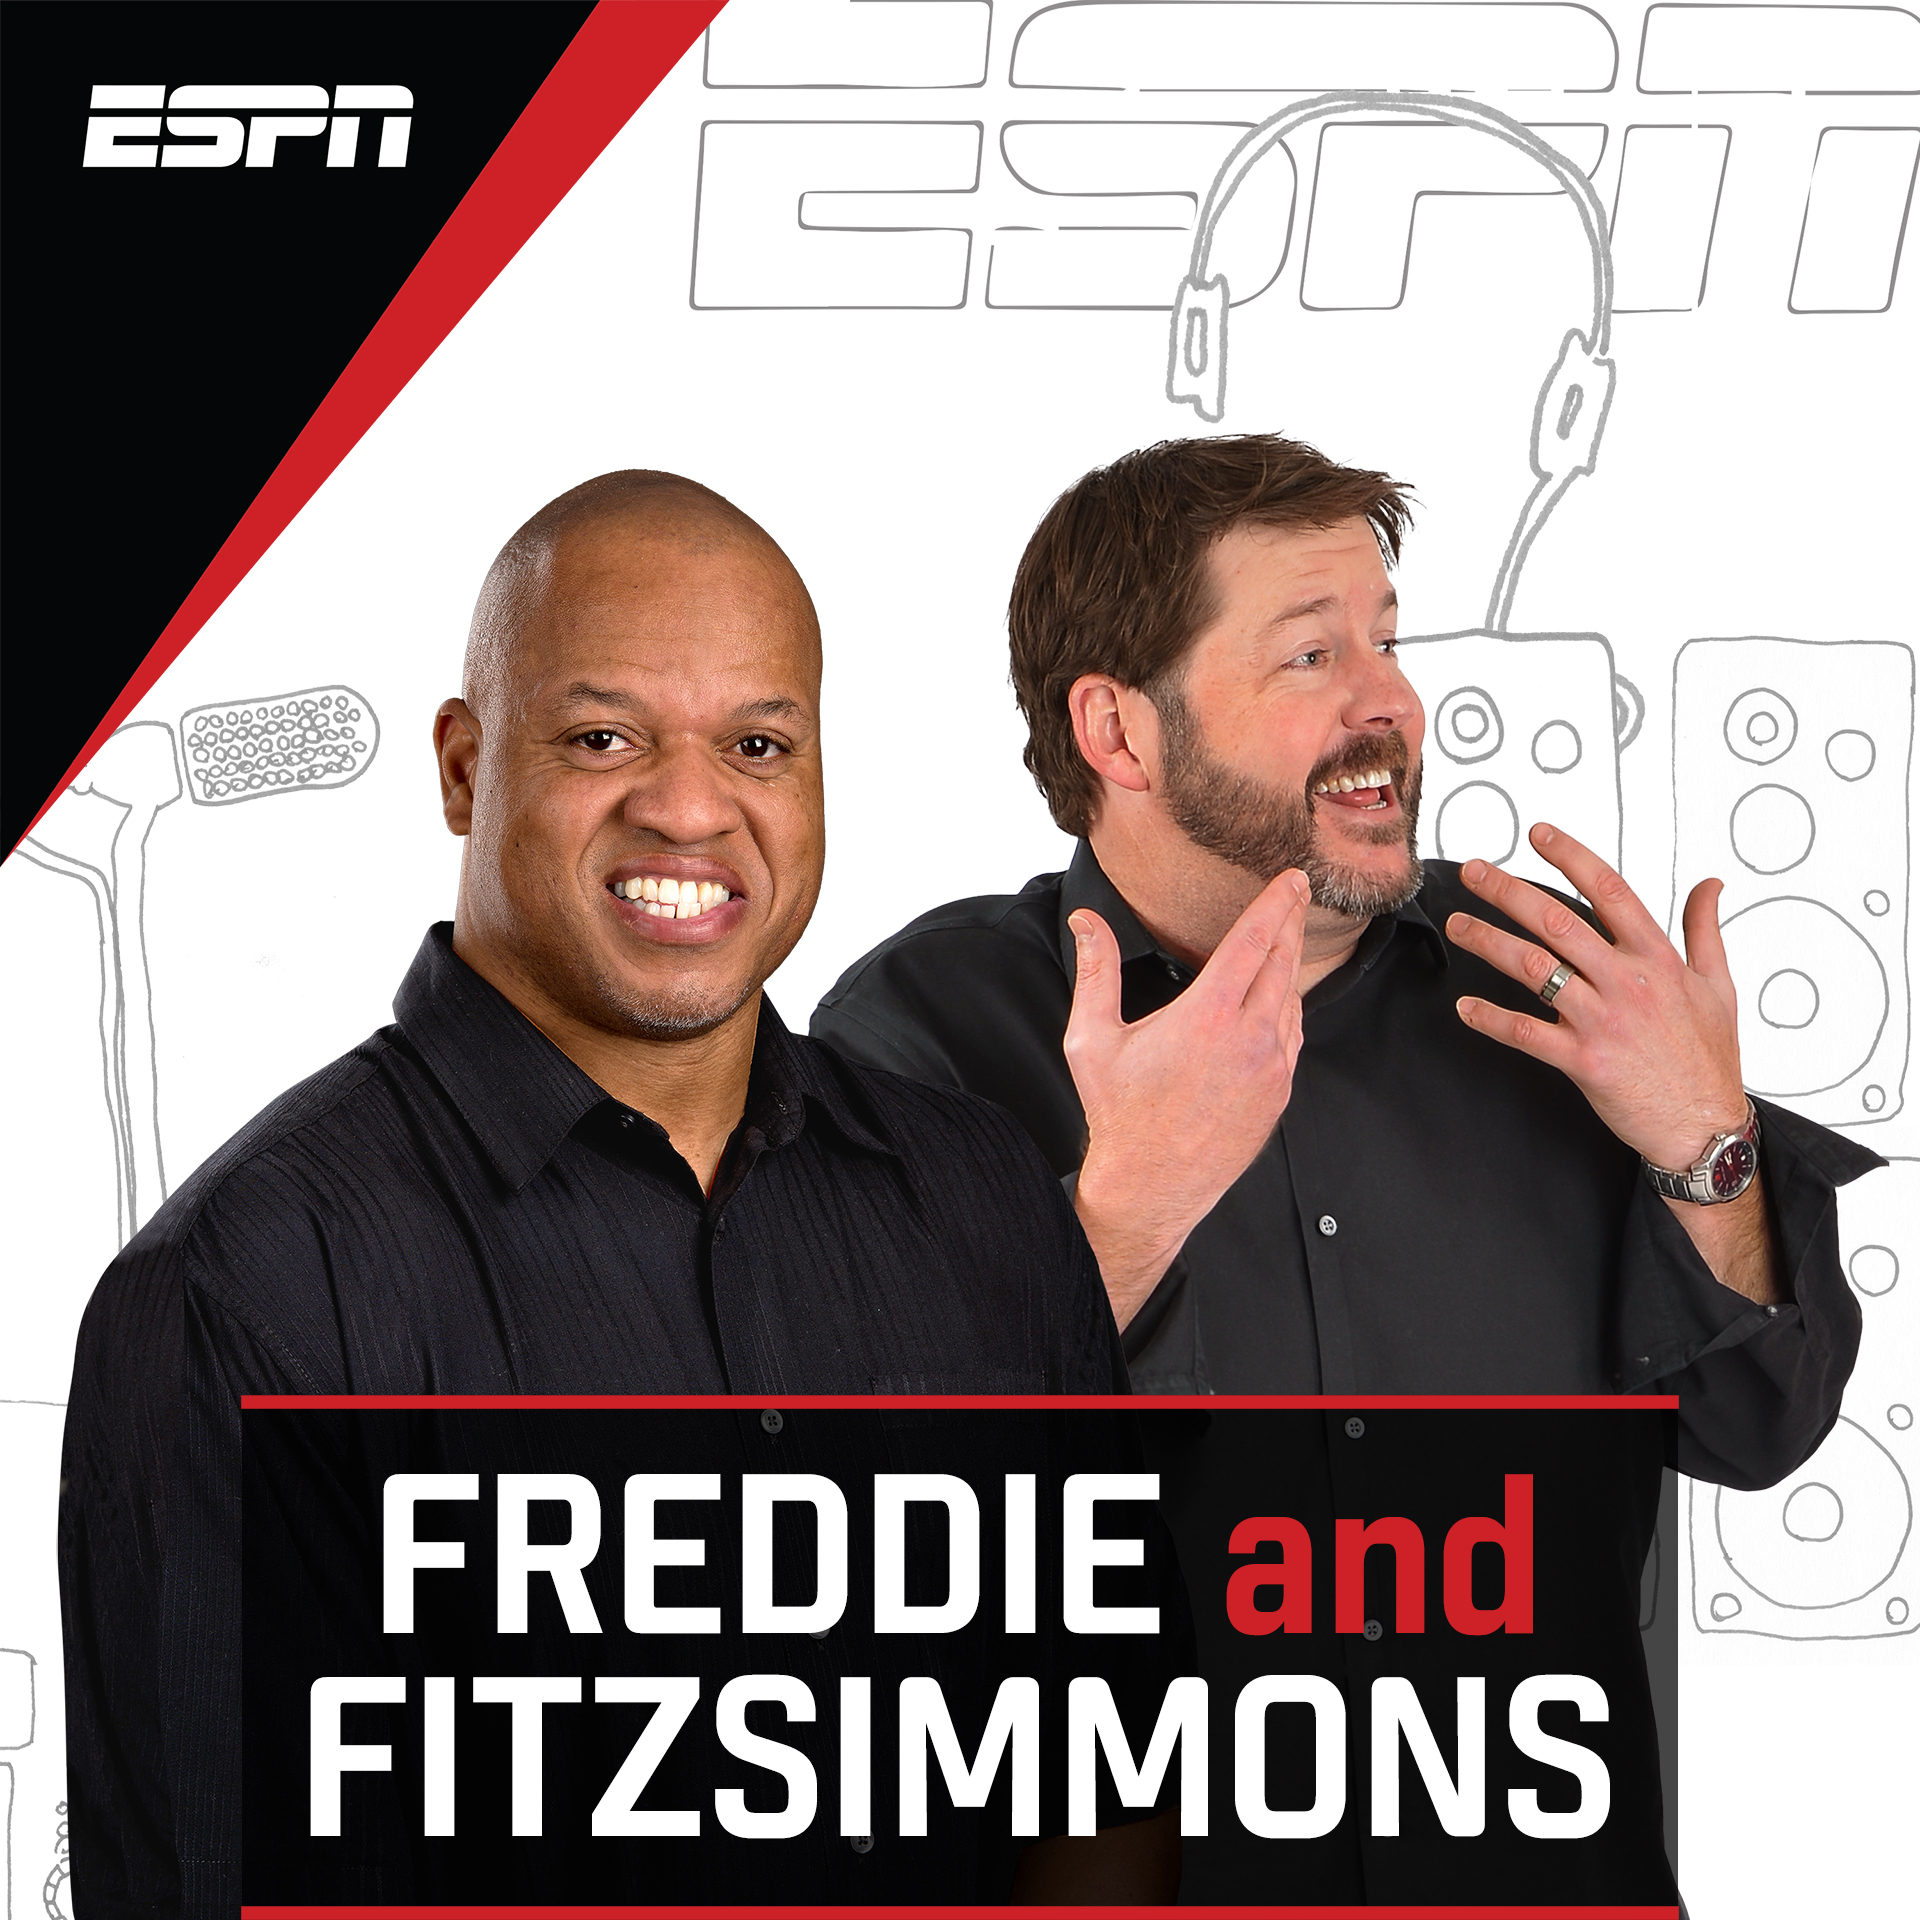 Freddie and Fitzsmmons